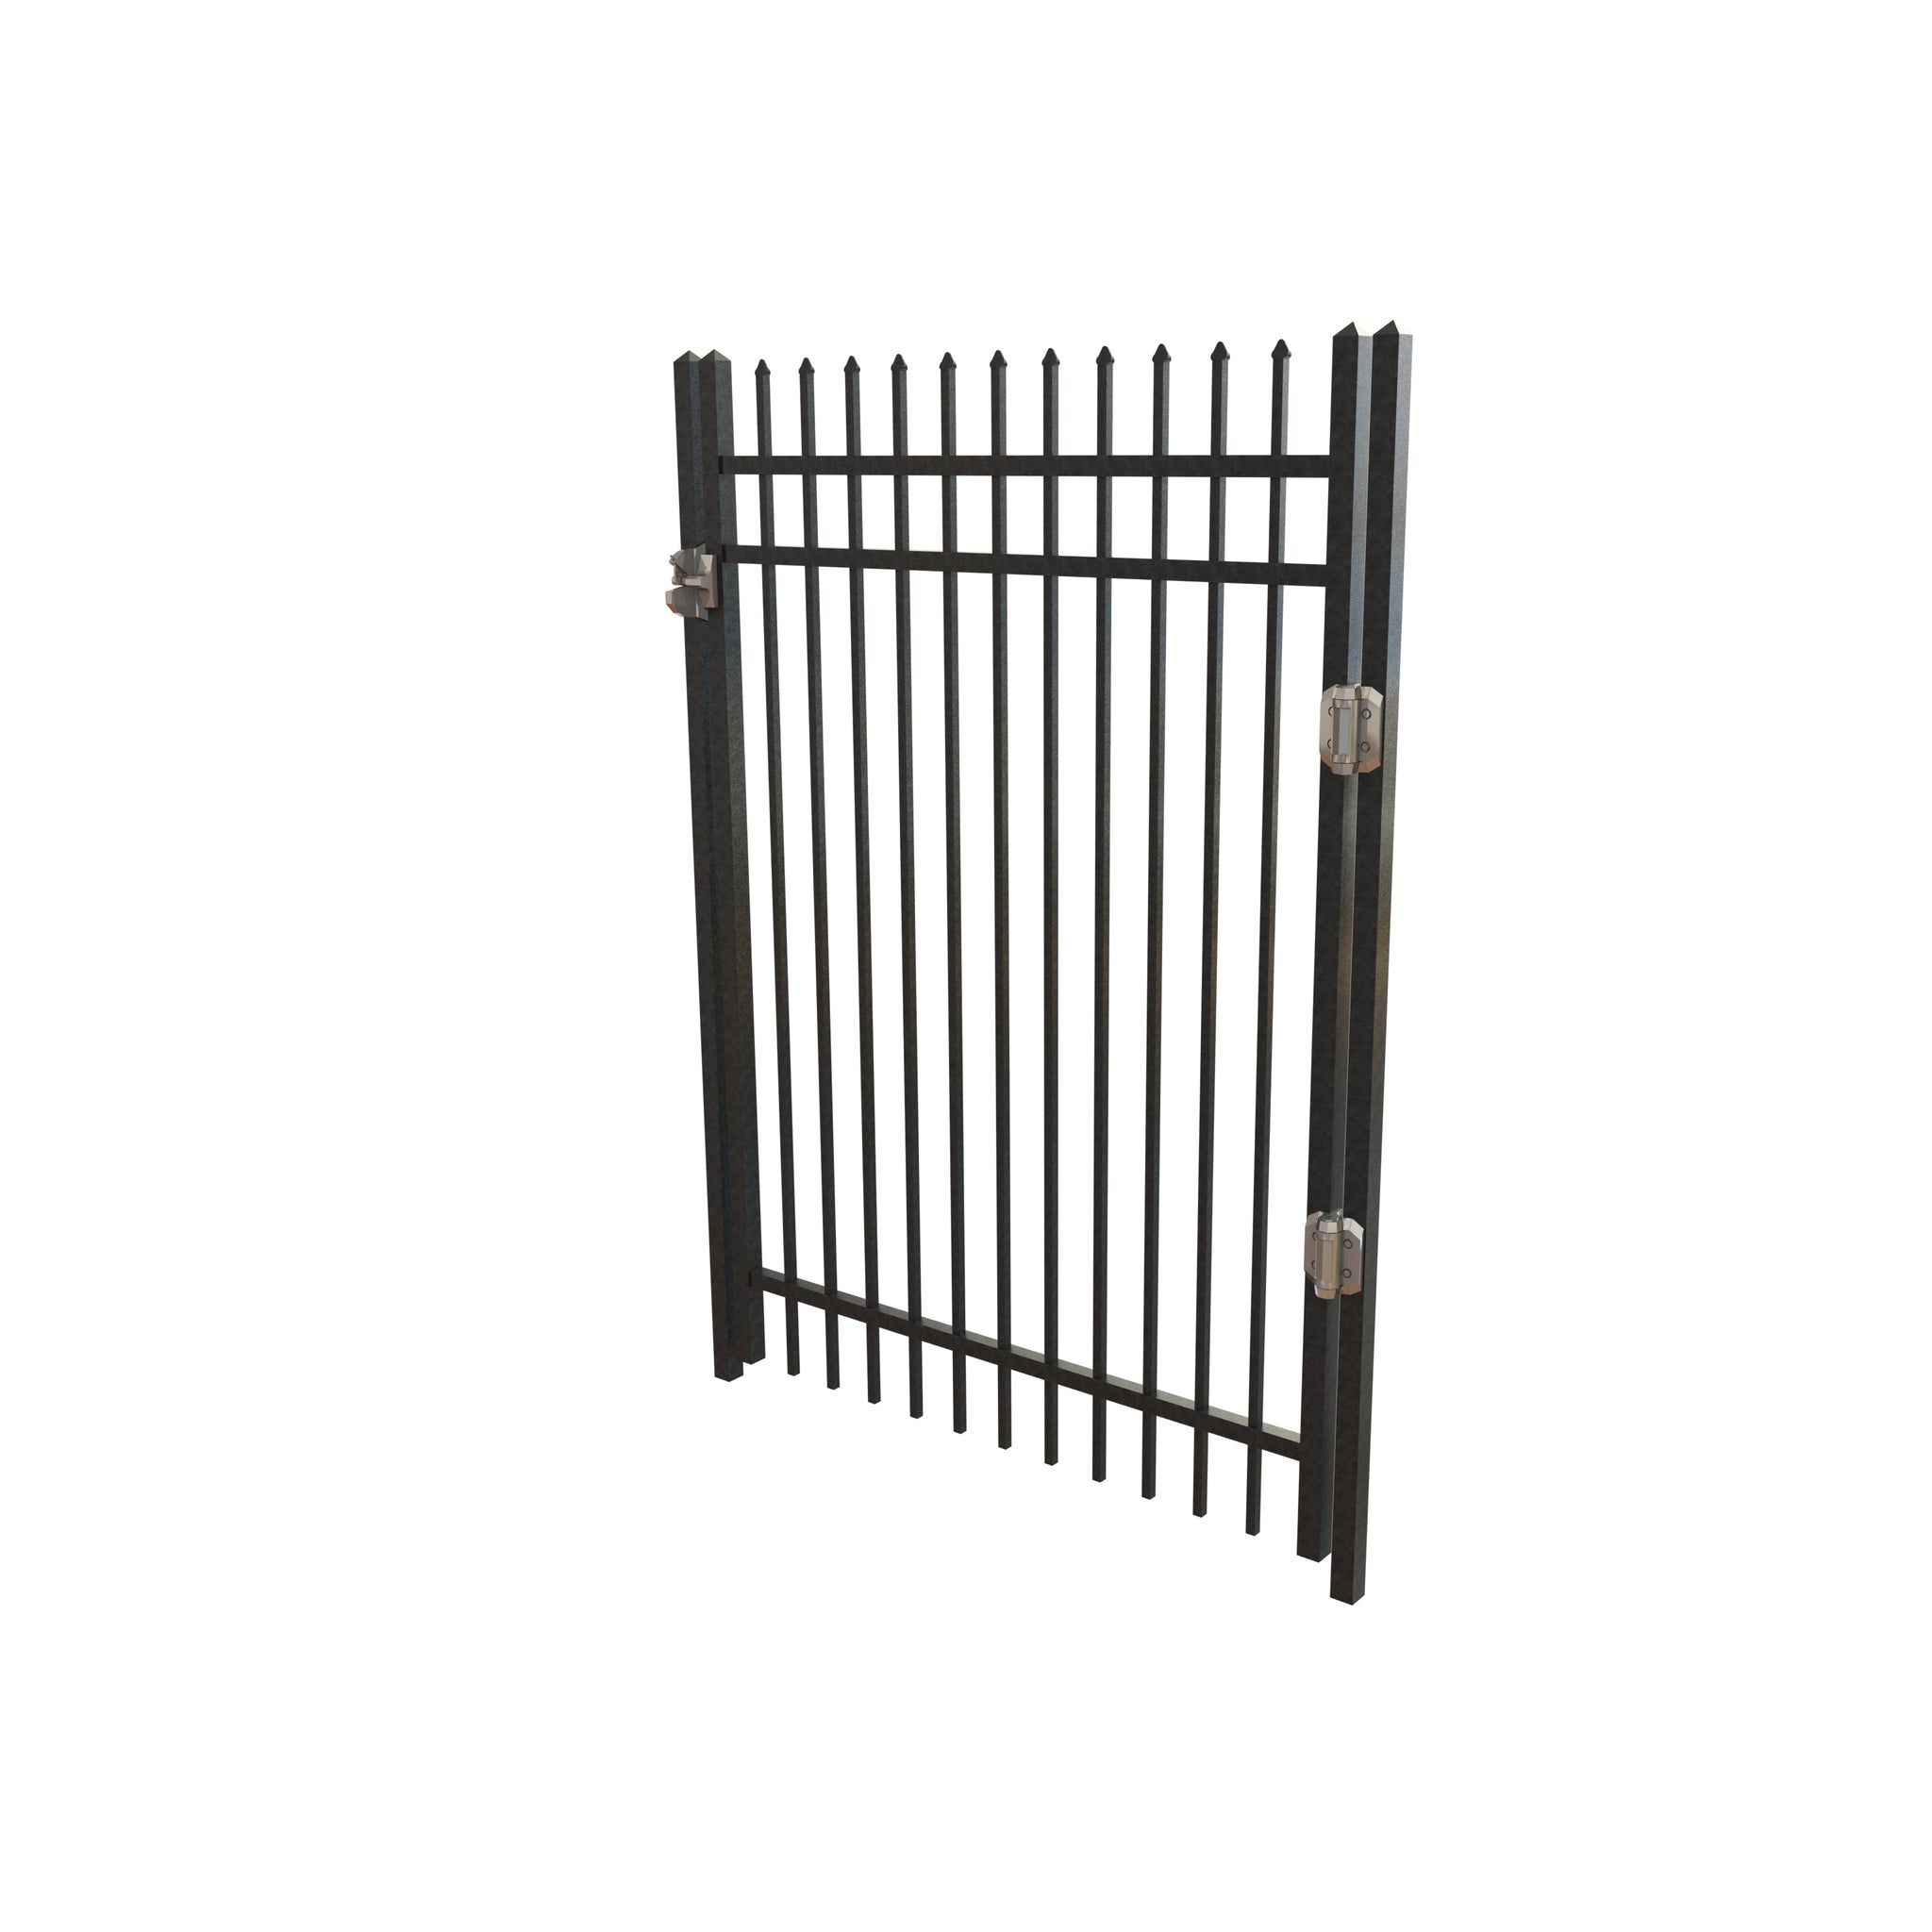 TruView Ornamental - Steel Fence Gate Kits - Pinnacle